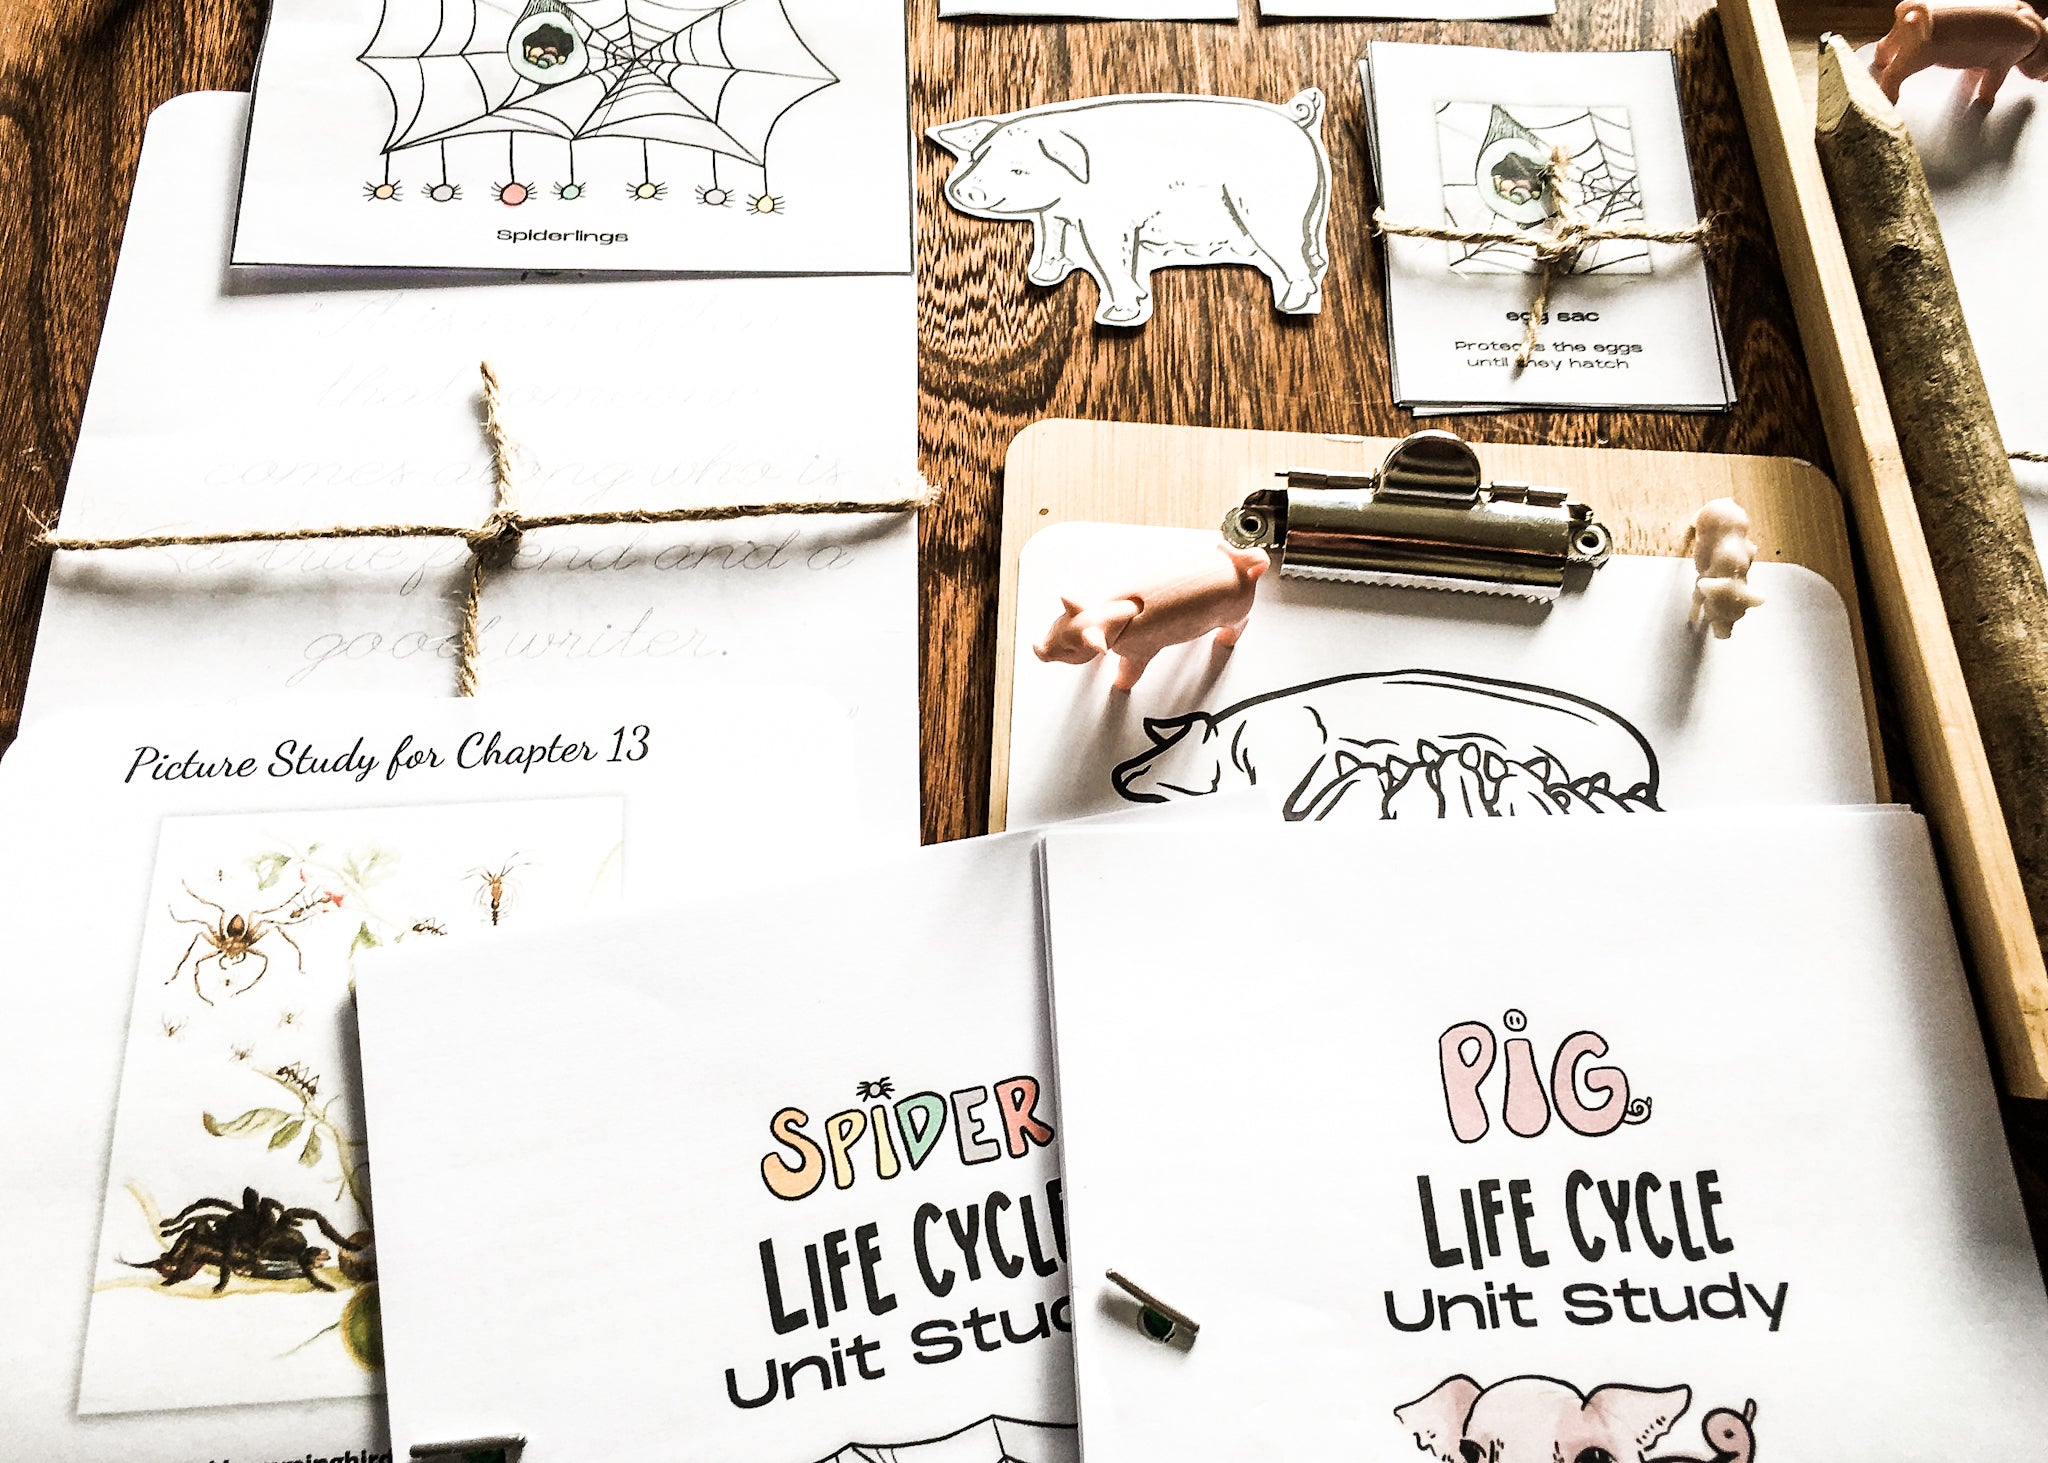 Charlotte's Web Art & Baking Unit Study + BONUS Life Cycles of a Pig & Spider!